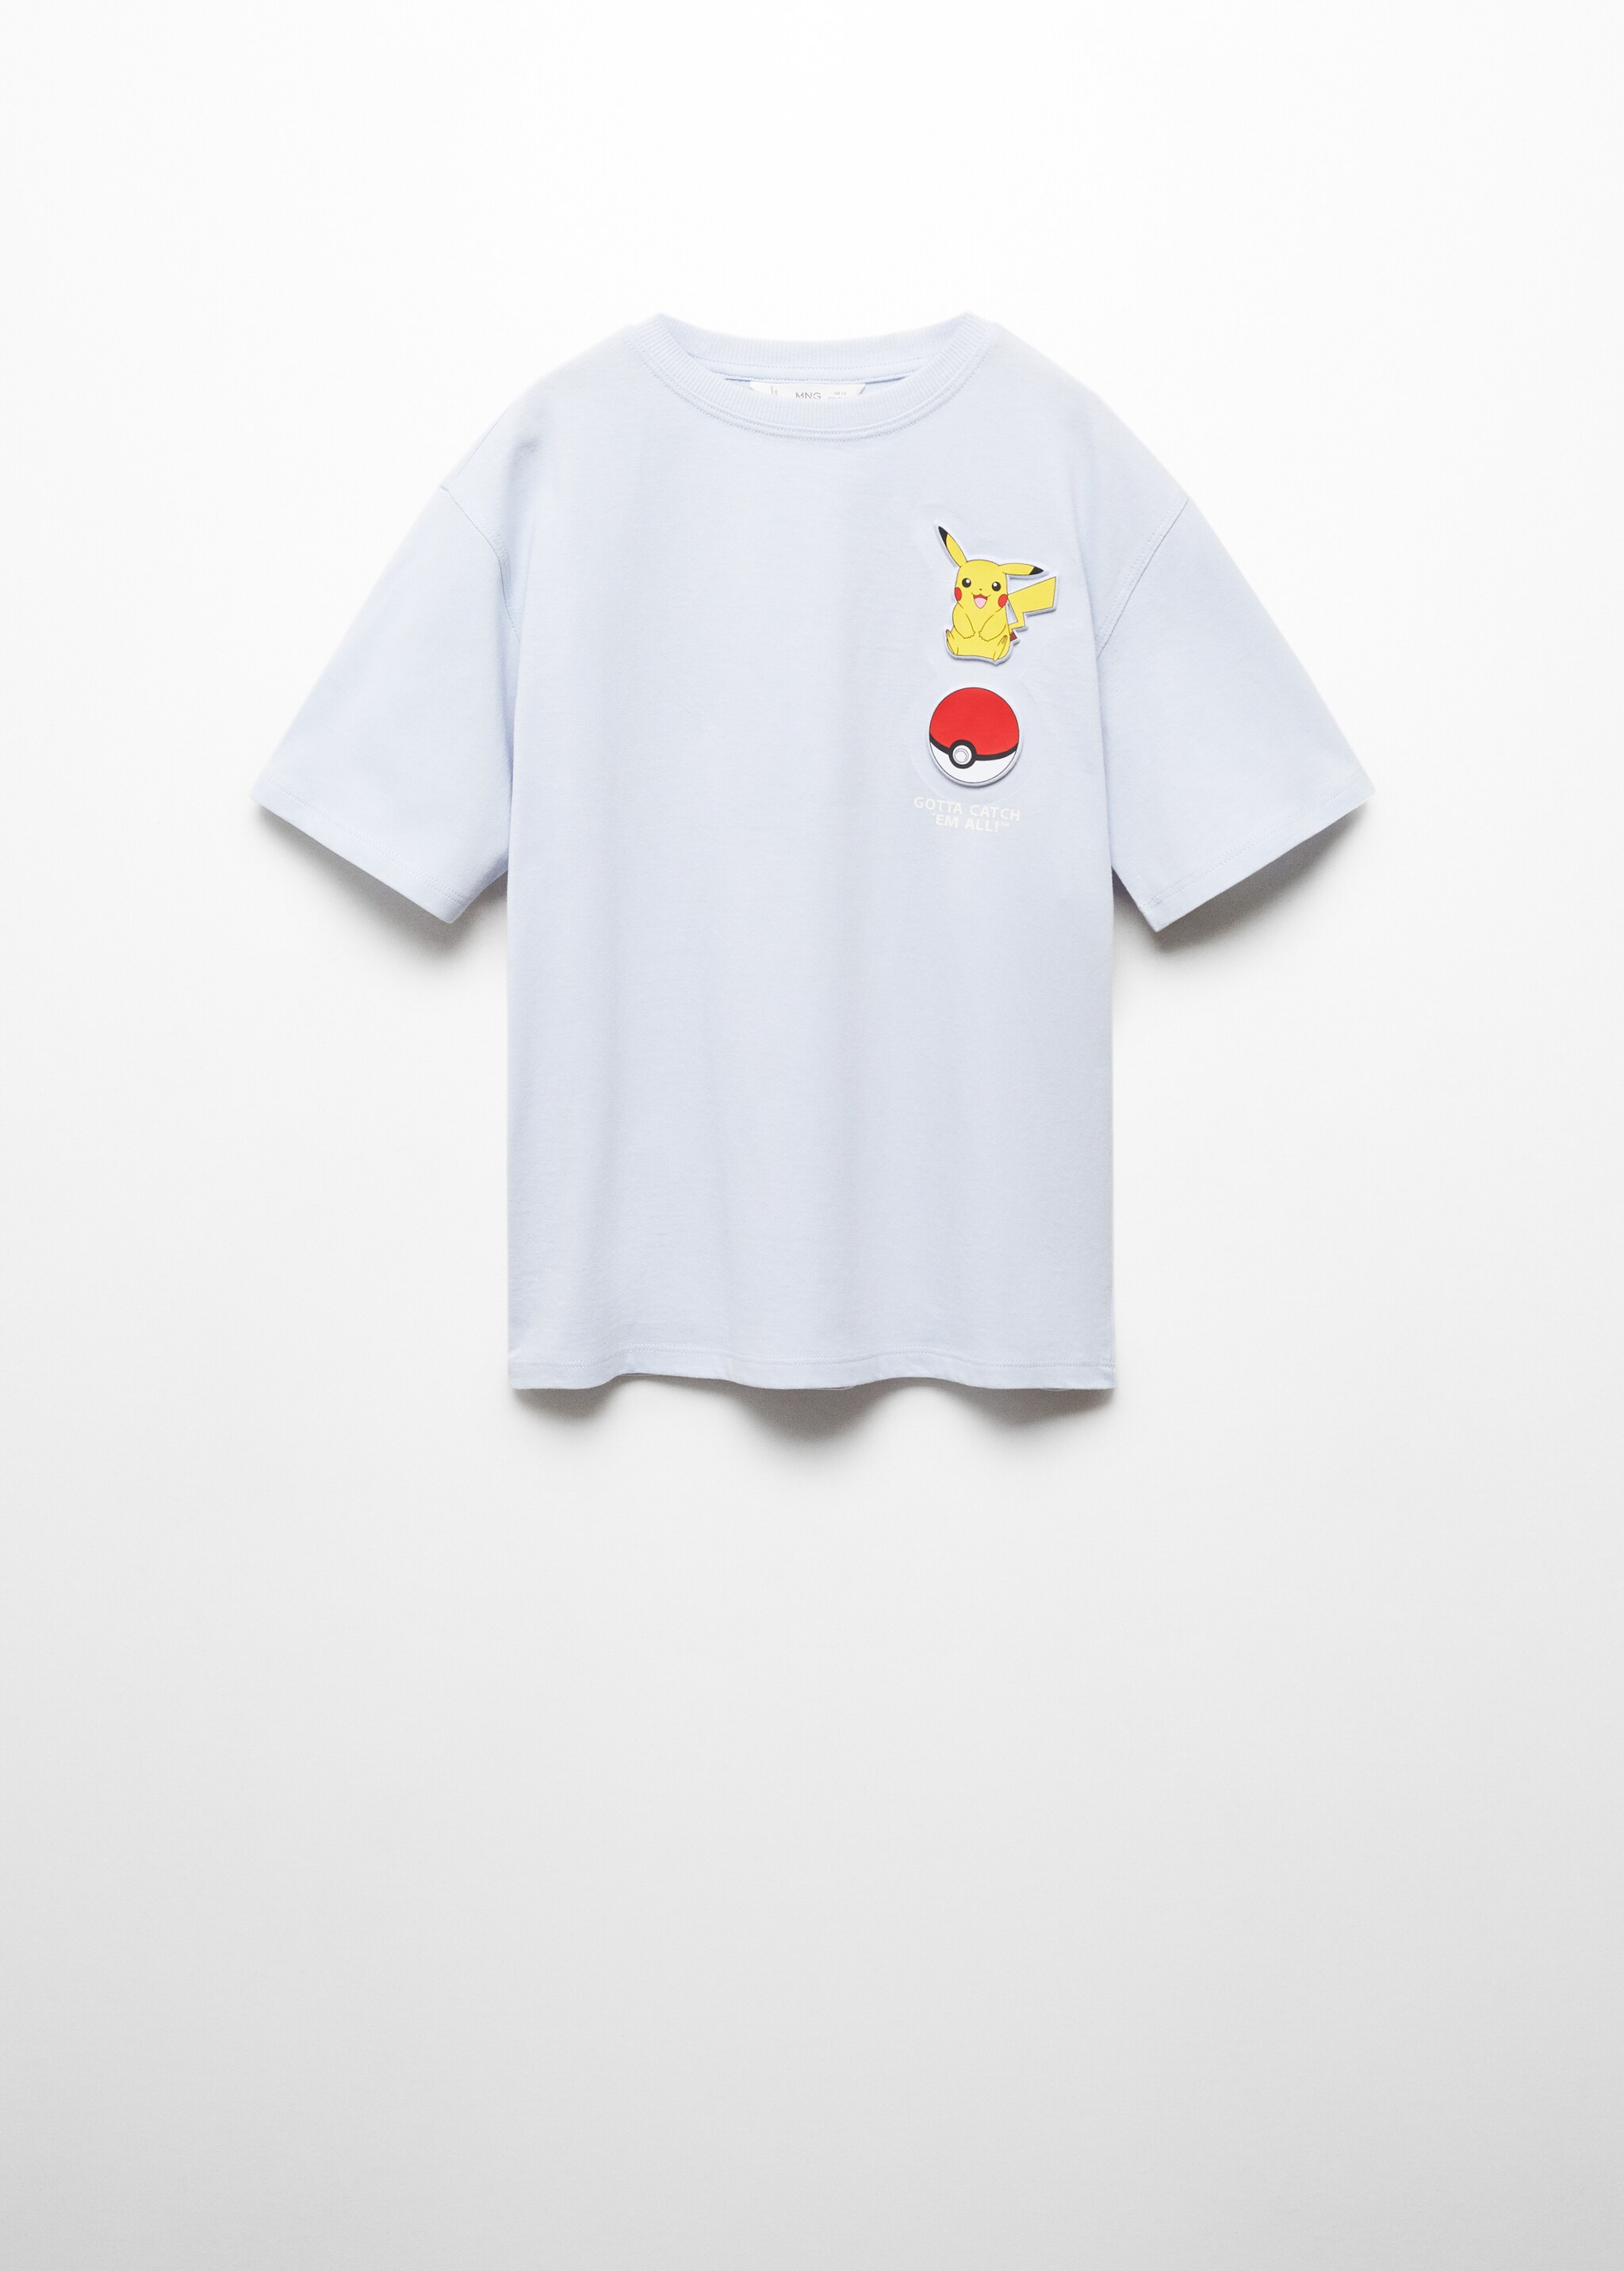 Camiseta Pikachu Pokemón  - Artículo sin modelo